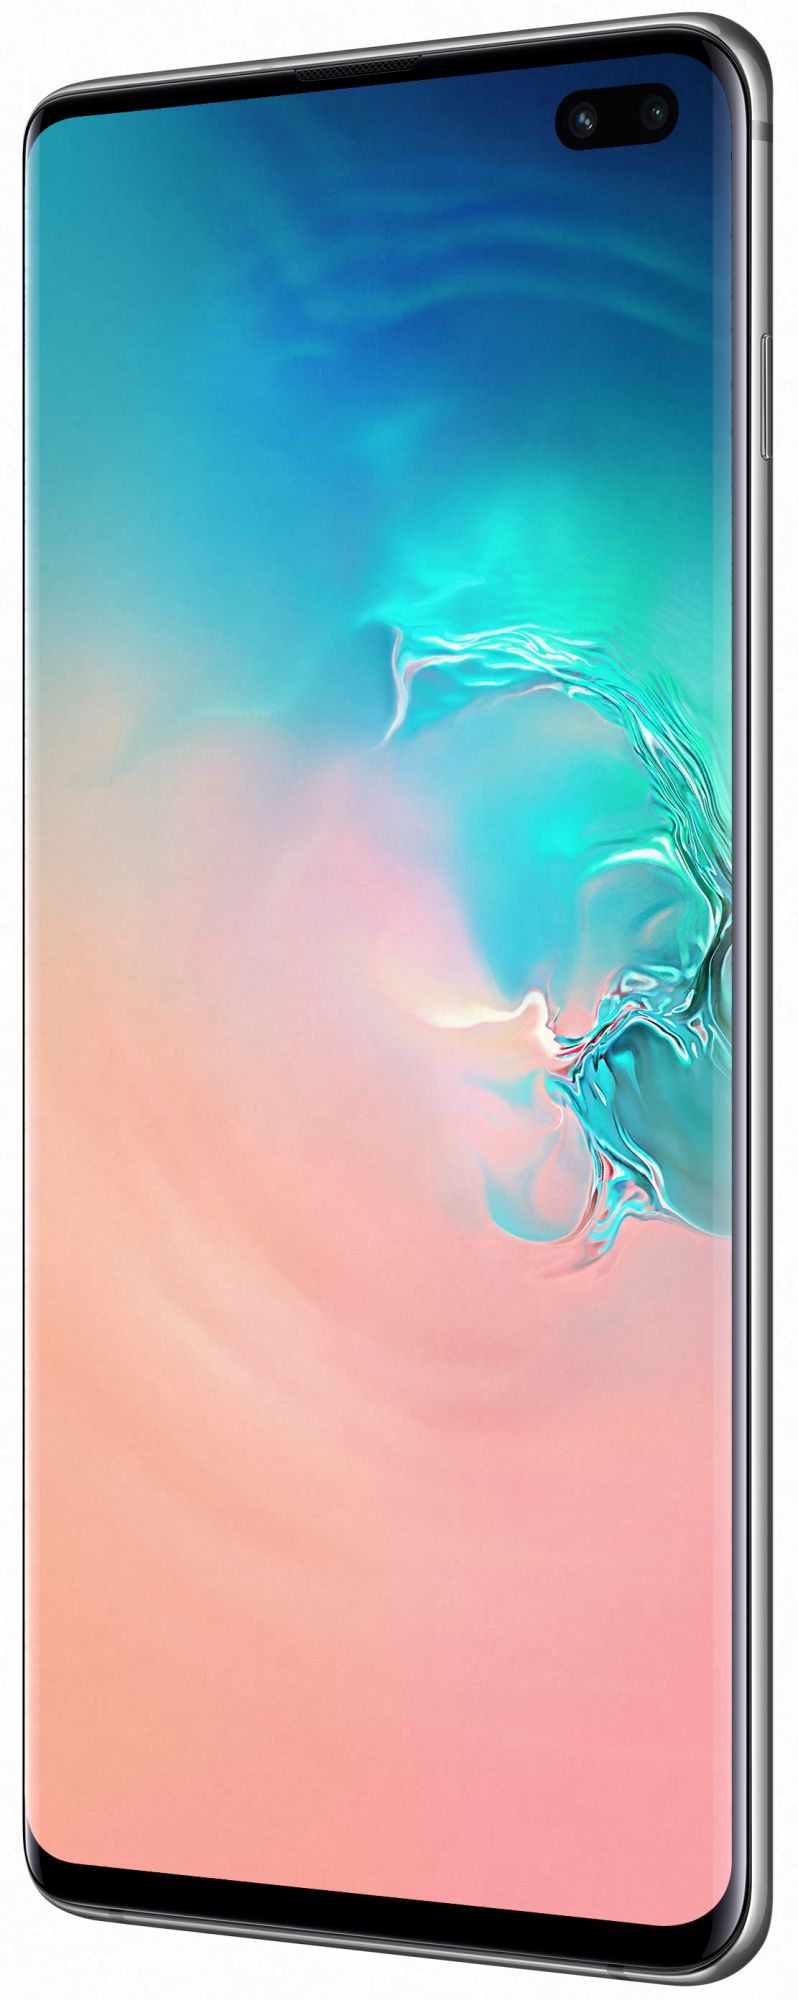 Samsung Galaxy S10 Plus 512GB_hor White